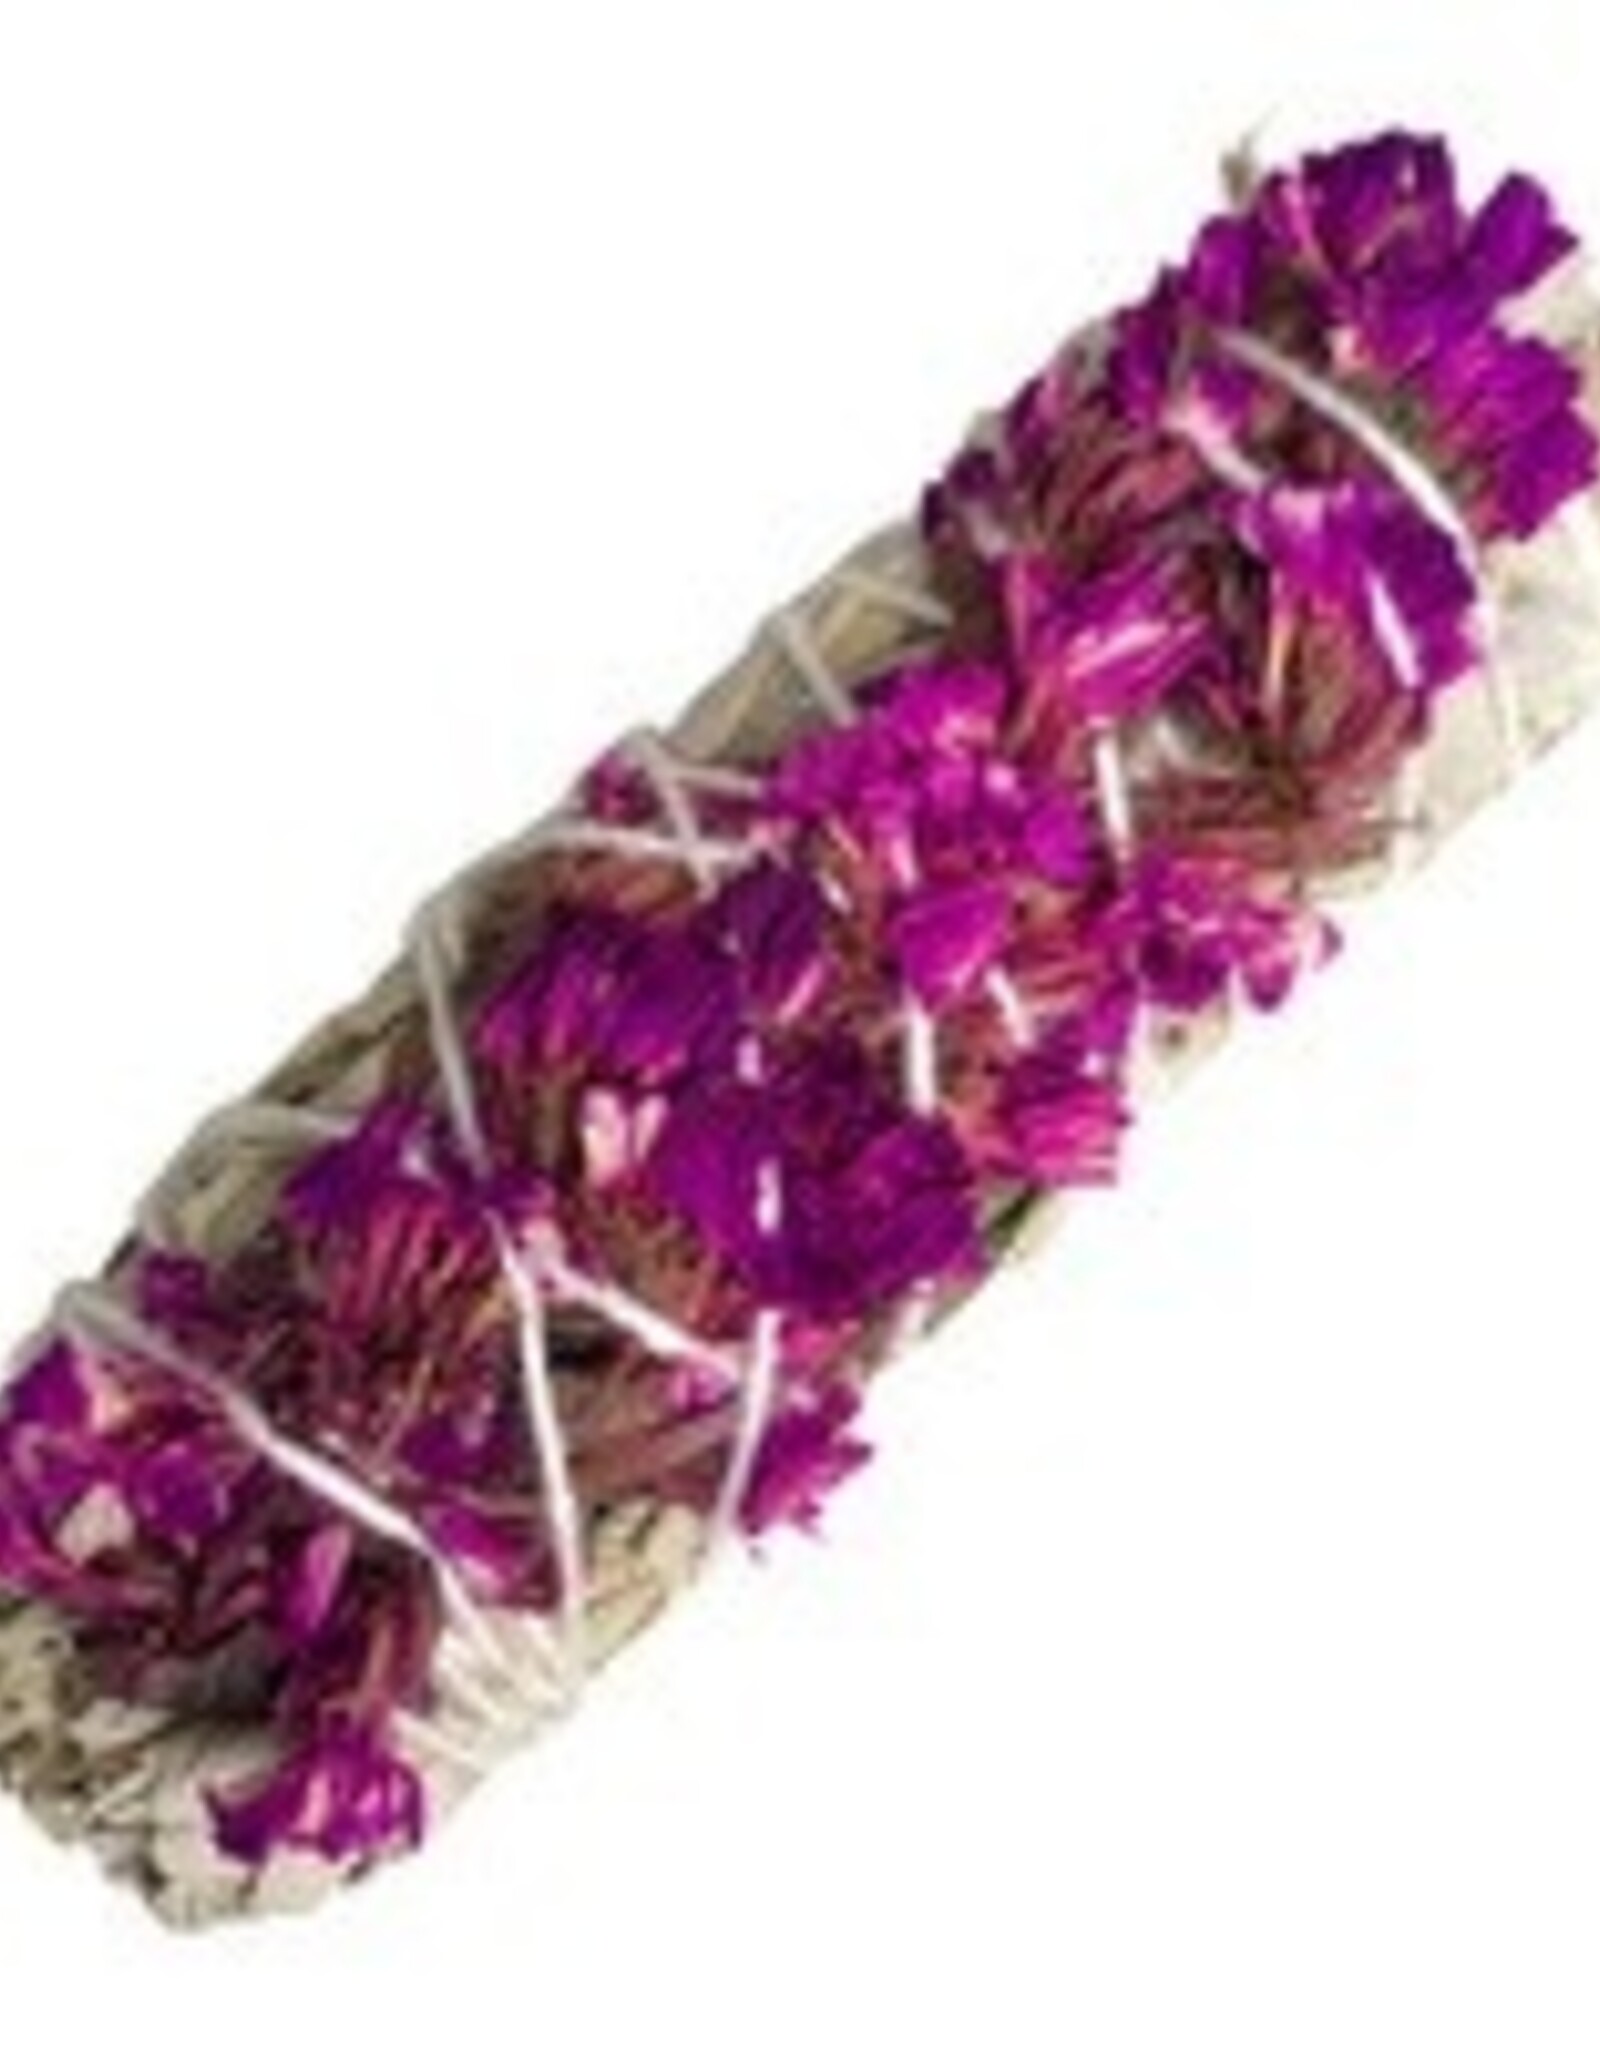 White Buffalo Sage - Sinuata Flowers - Lavender Colour - Smudge Stick 4"